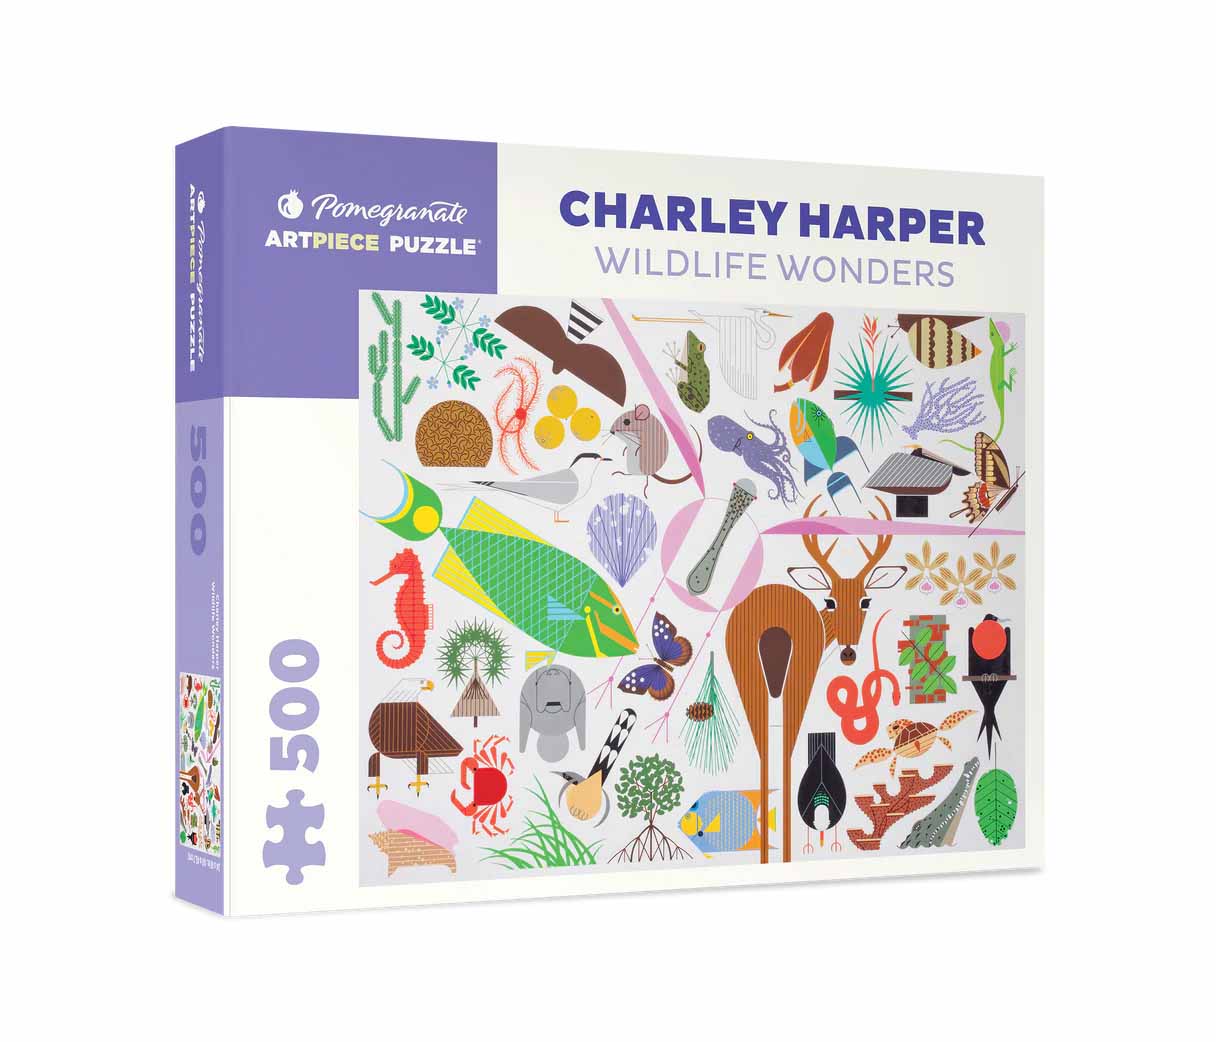 Wildlife Wonders by Charley Harper Animals Jigsaw Puzzle